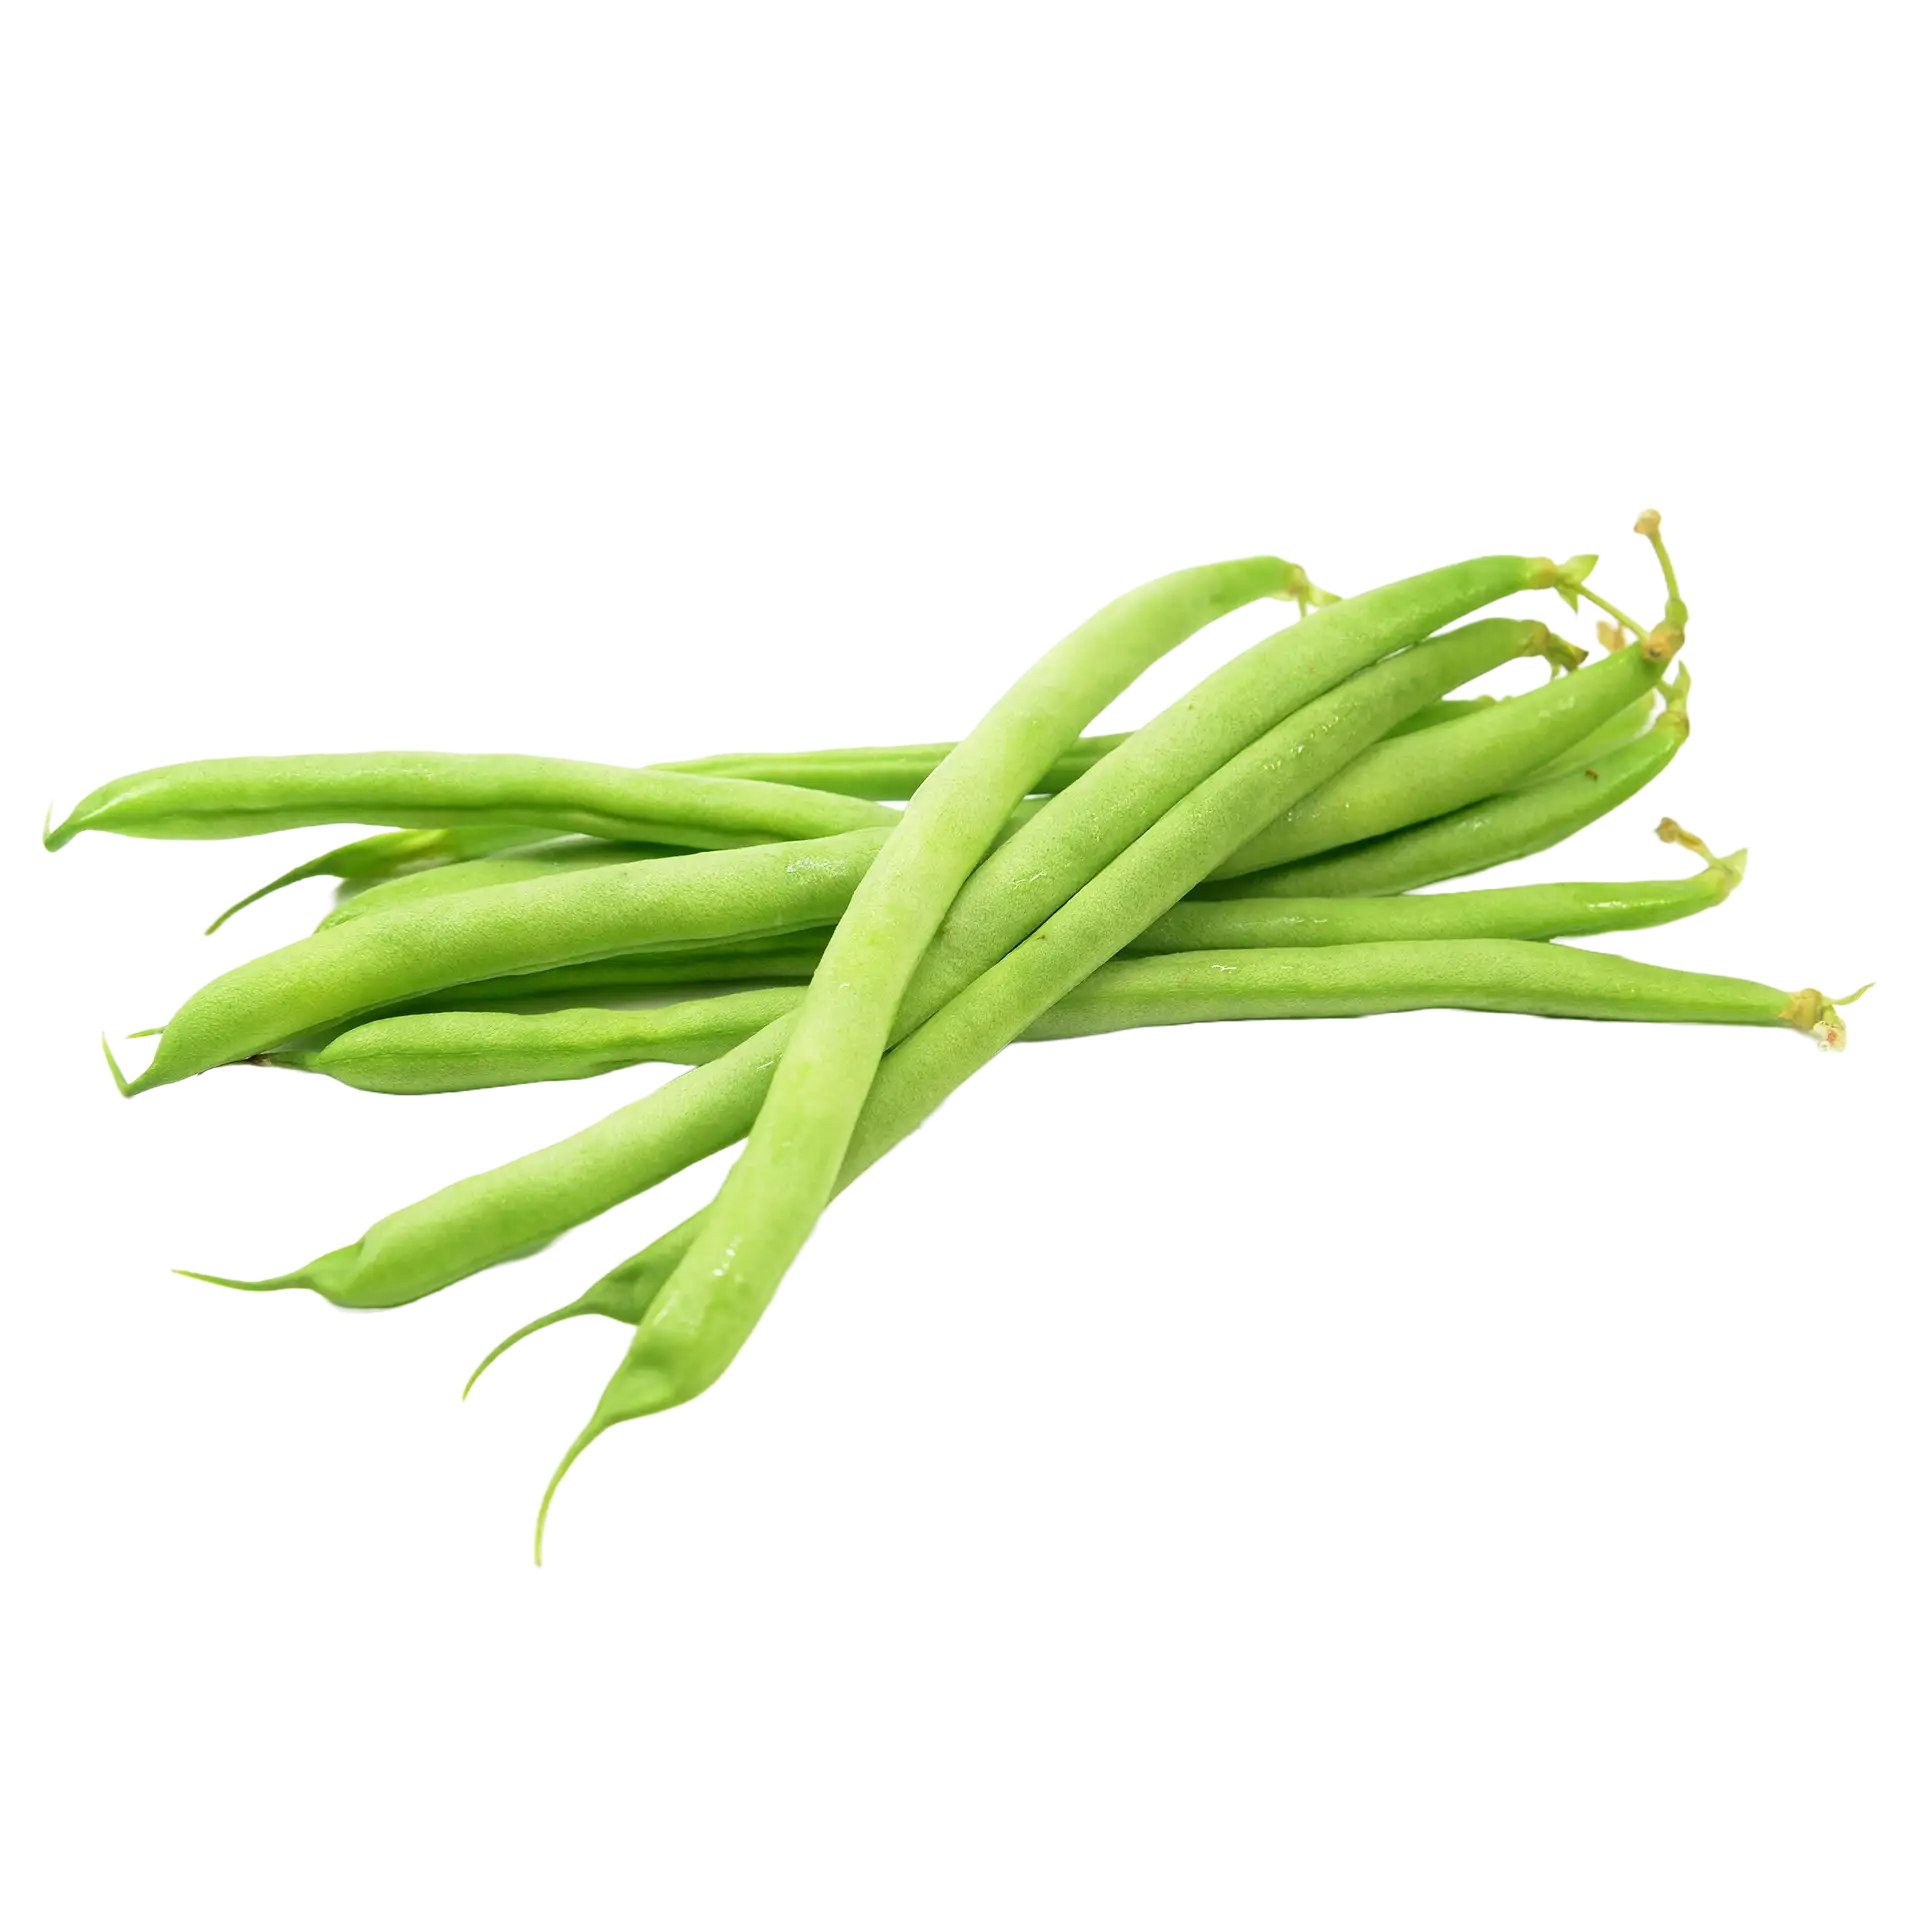 Pile of green beans with an open bean pod